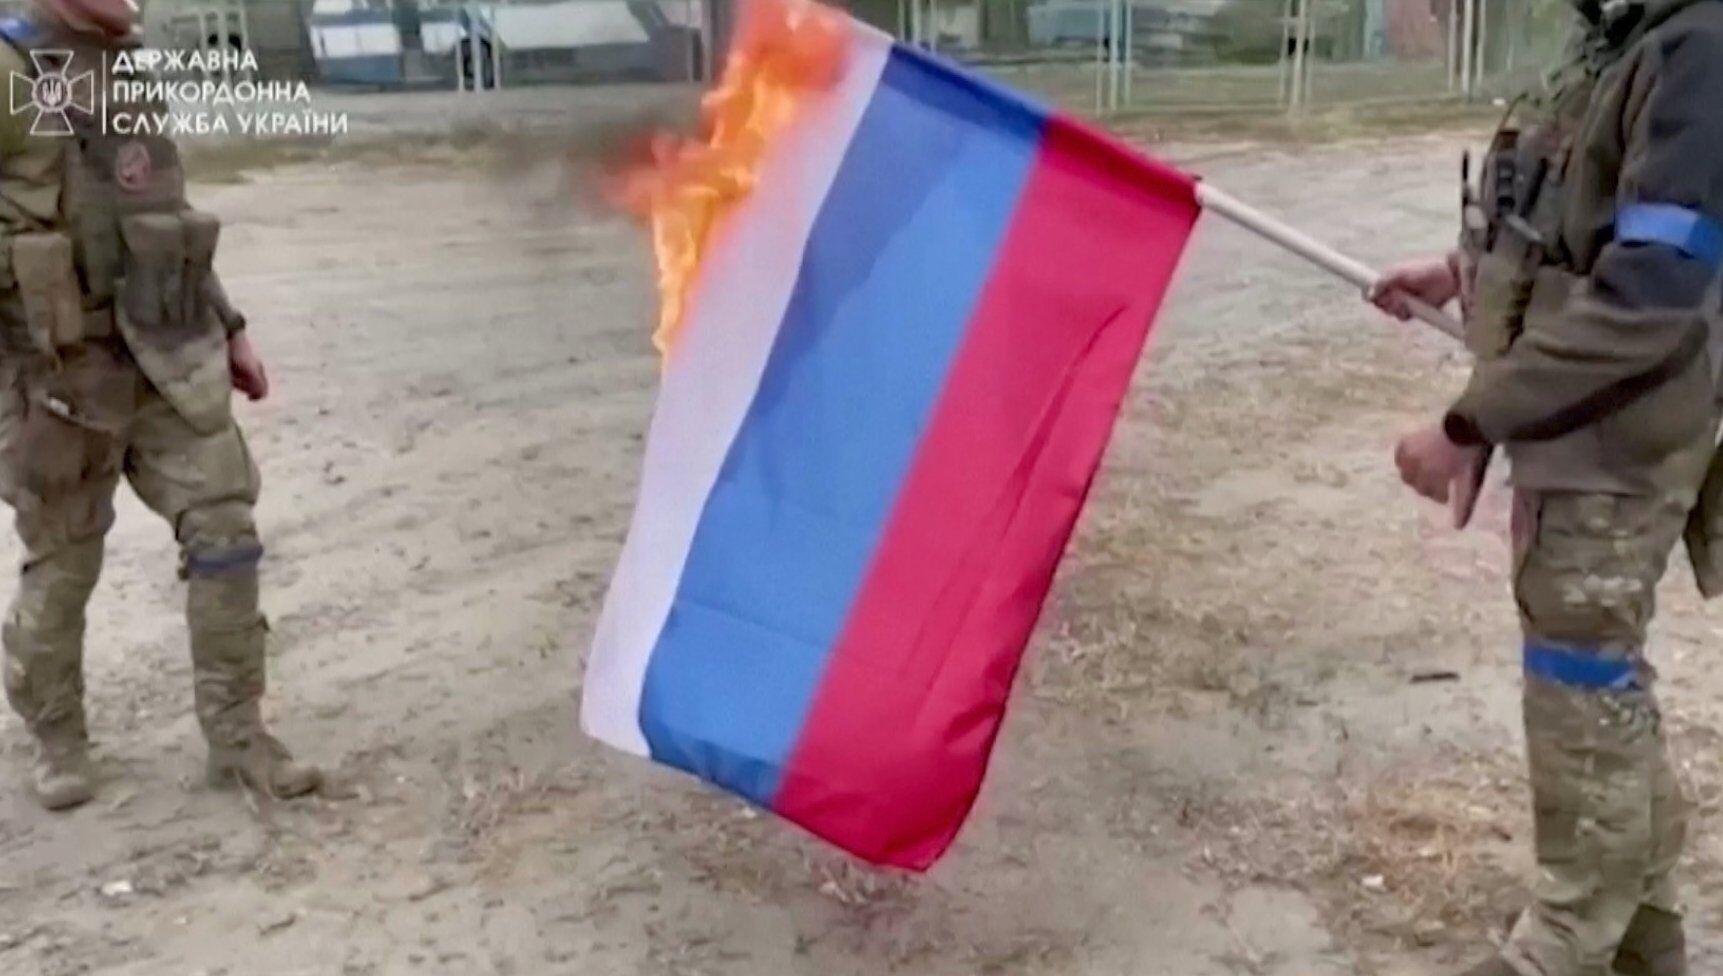 Video: Russian troops brandishing Soviet flag in Ukraine